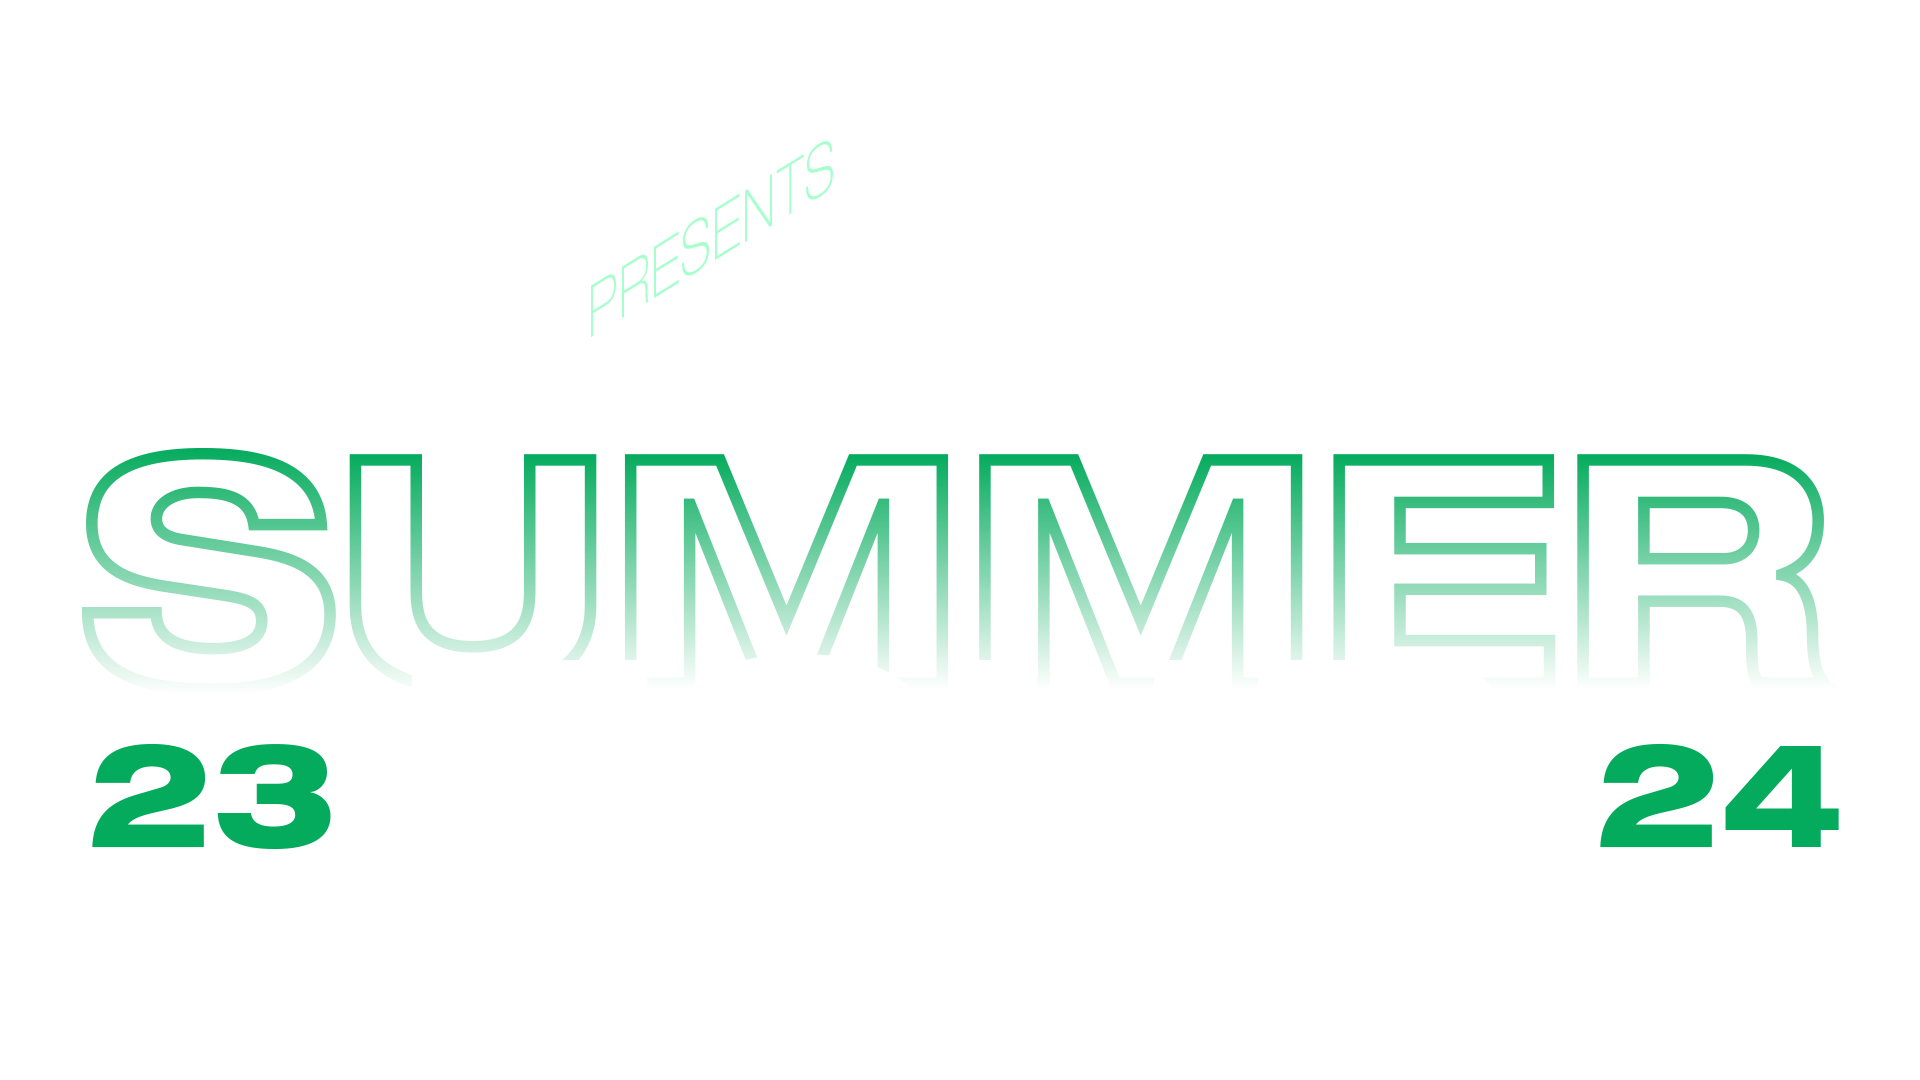 Odd Company Presents: George FM Summer Tour NELSON